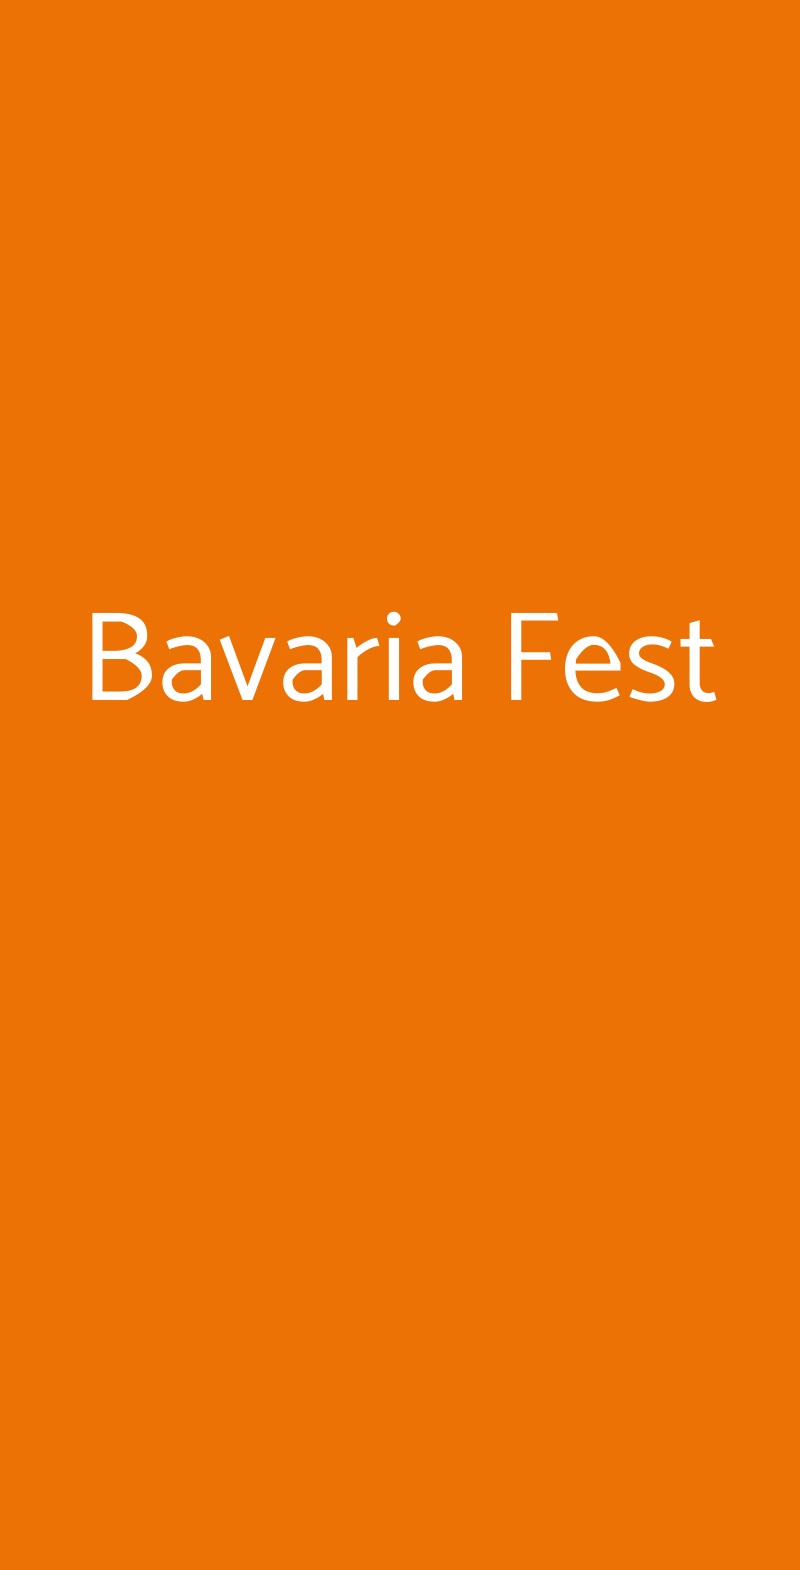 Bavaria Fest Marcon menù 1 pagina